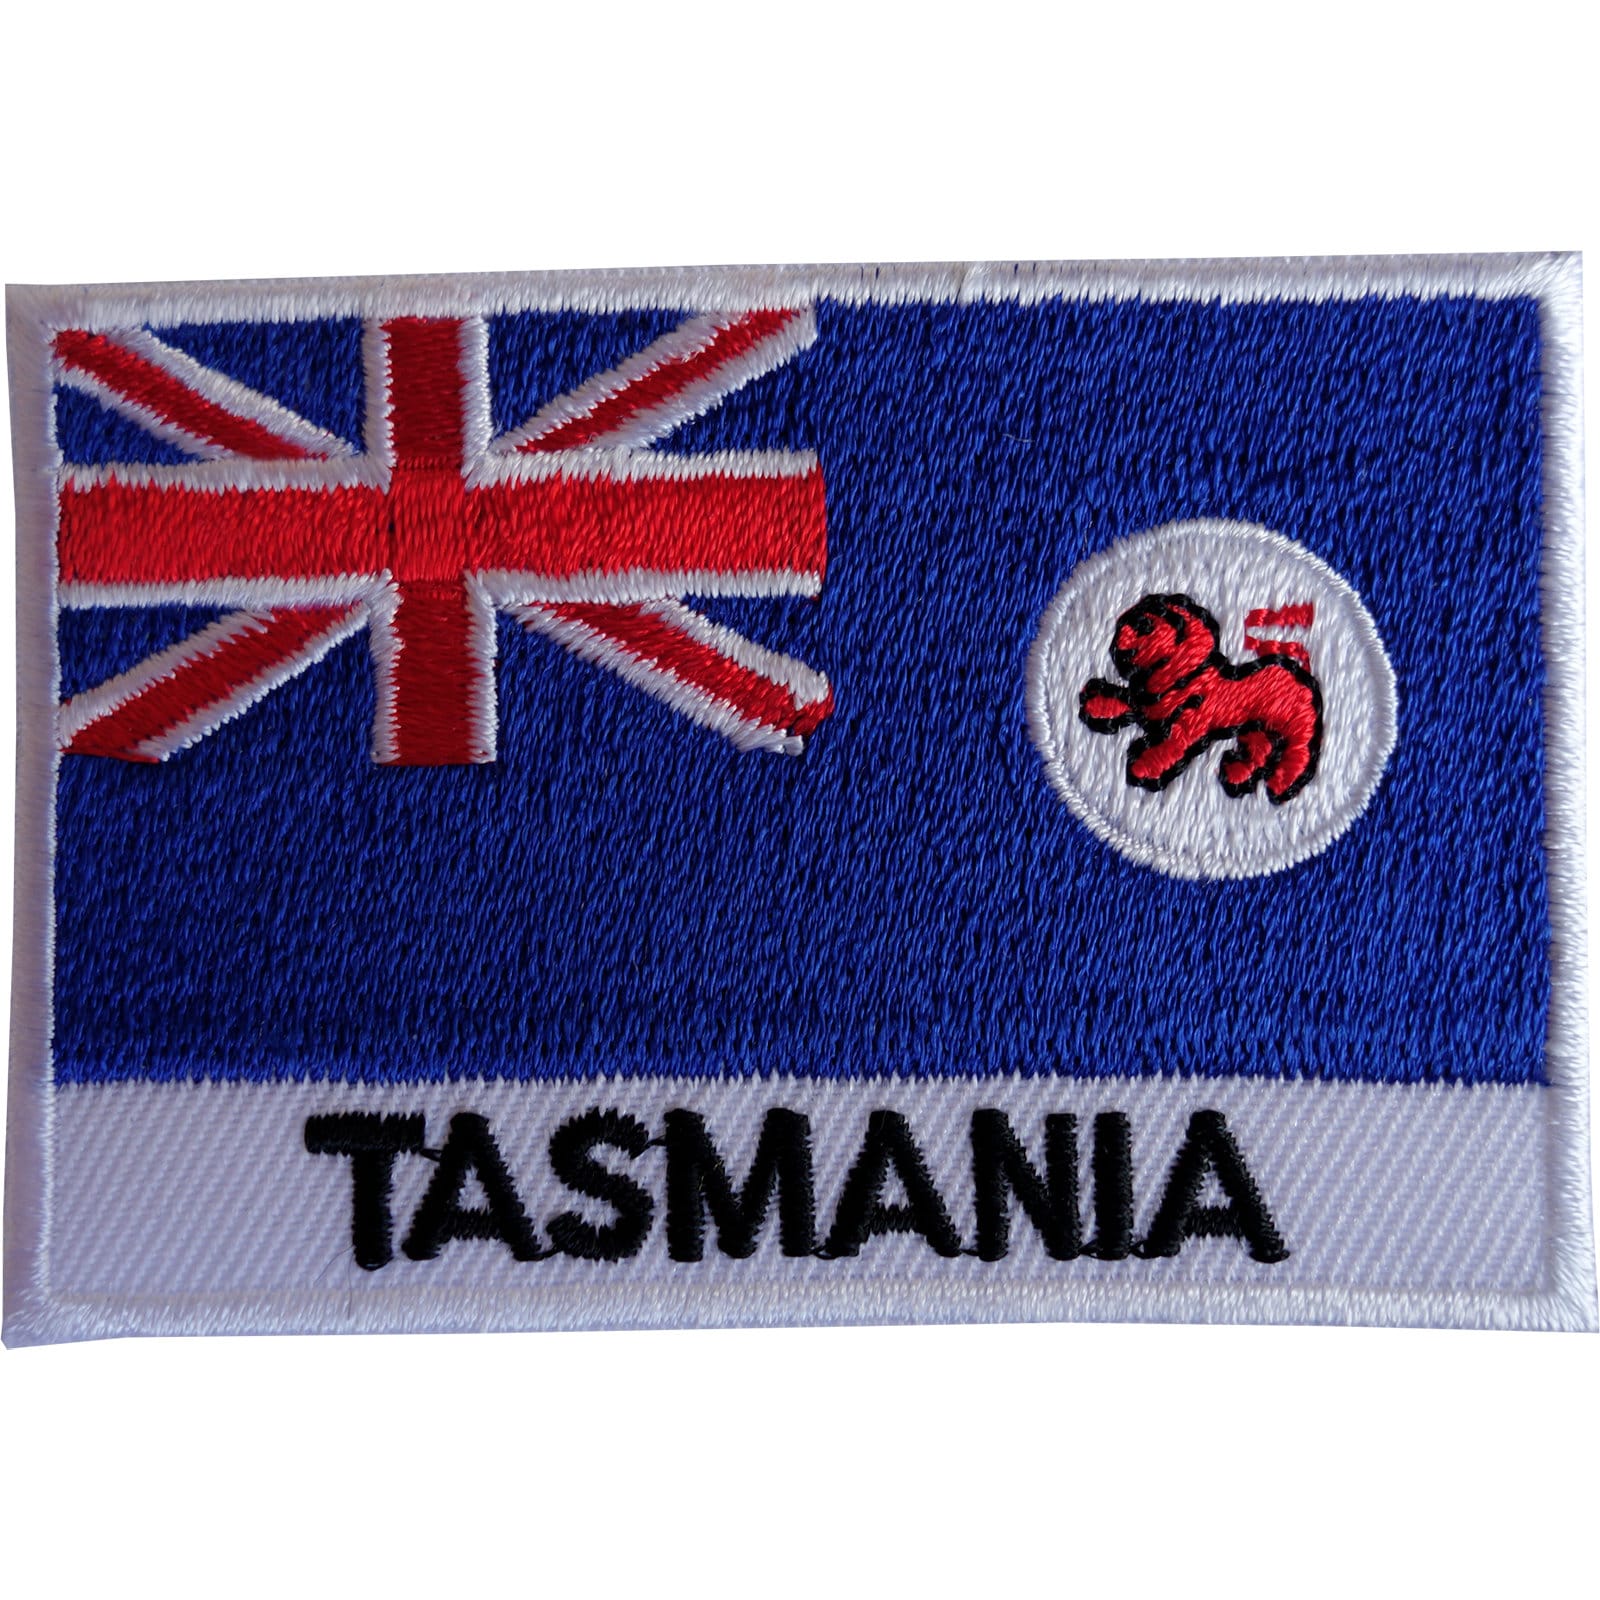 Tasmania Flag Patch Sew on Australian | Etsy